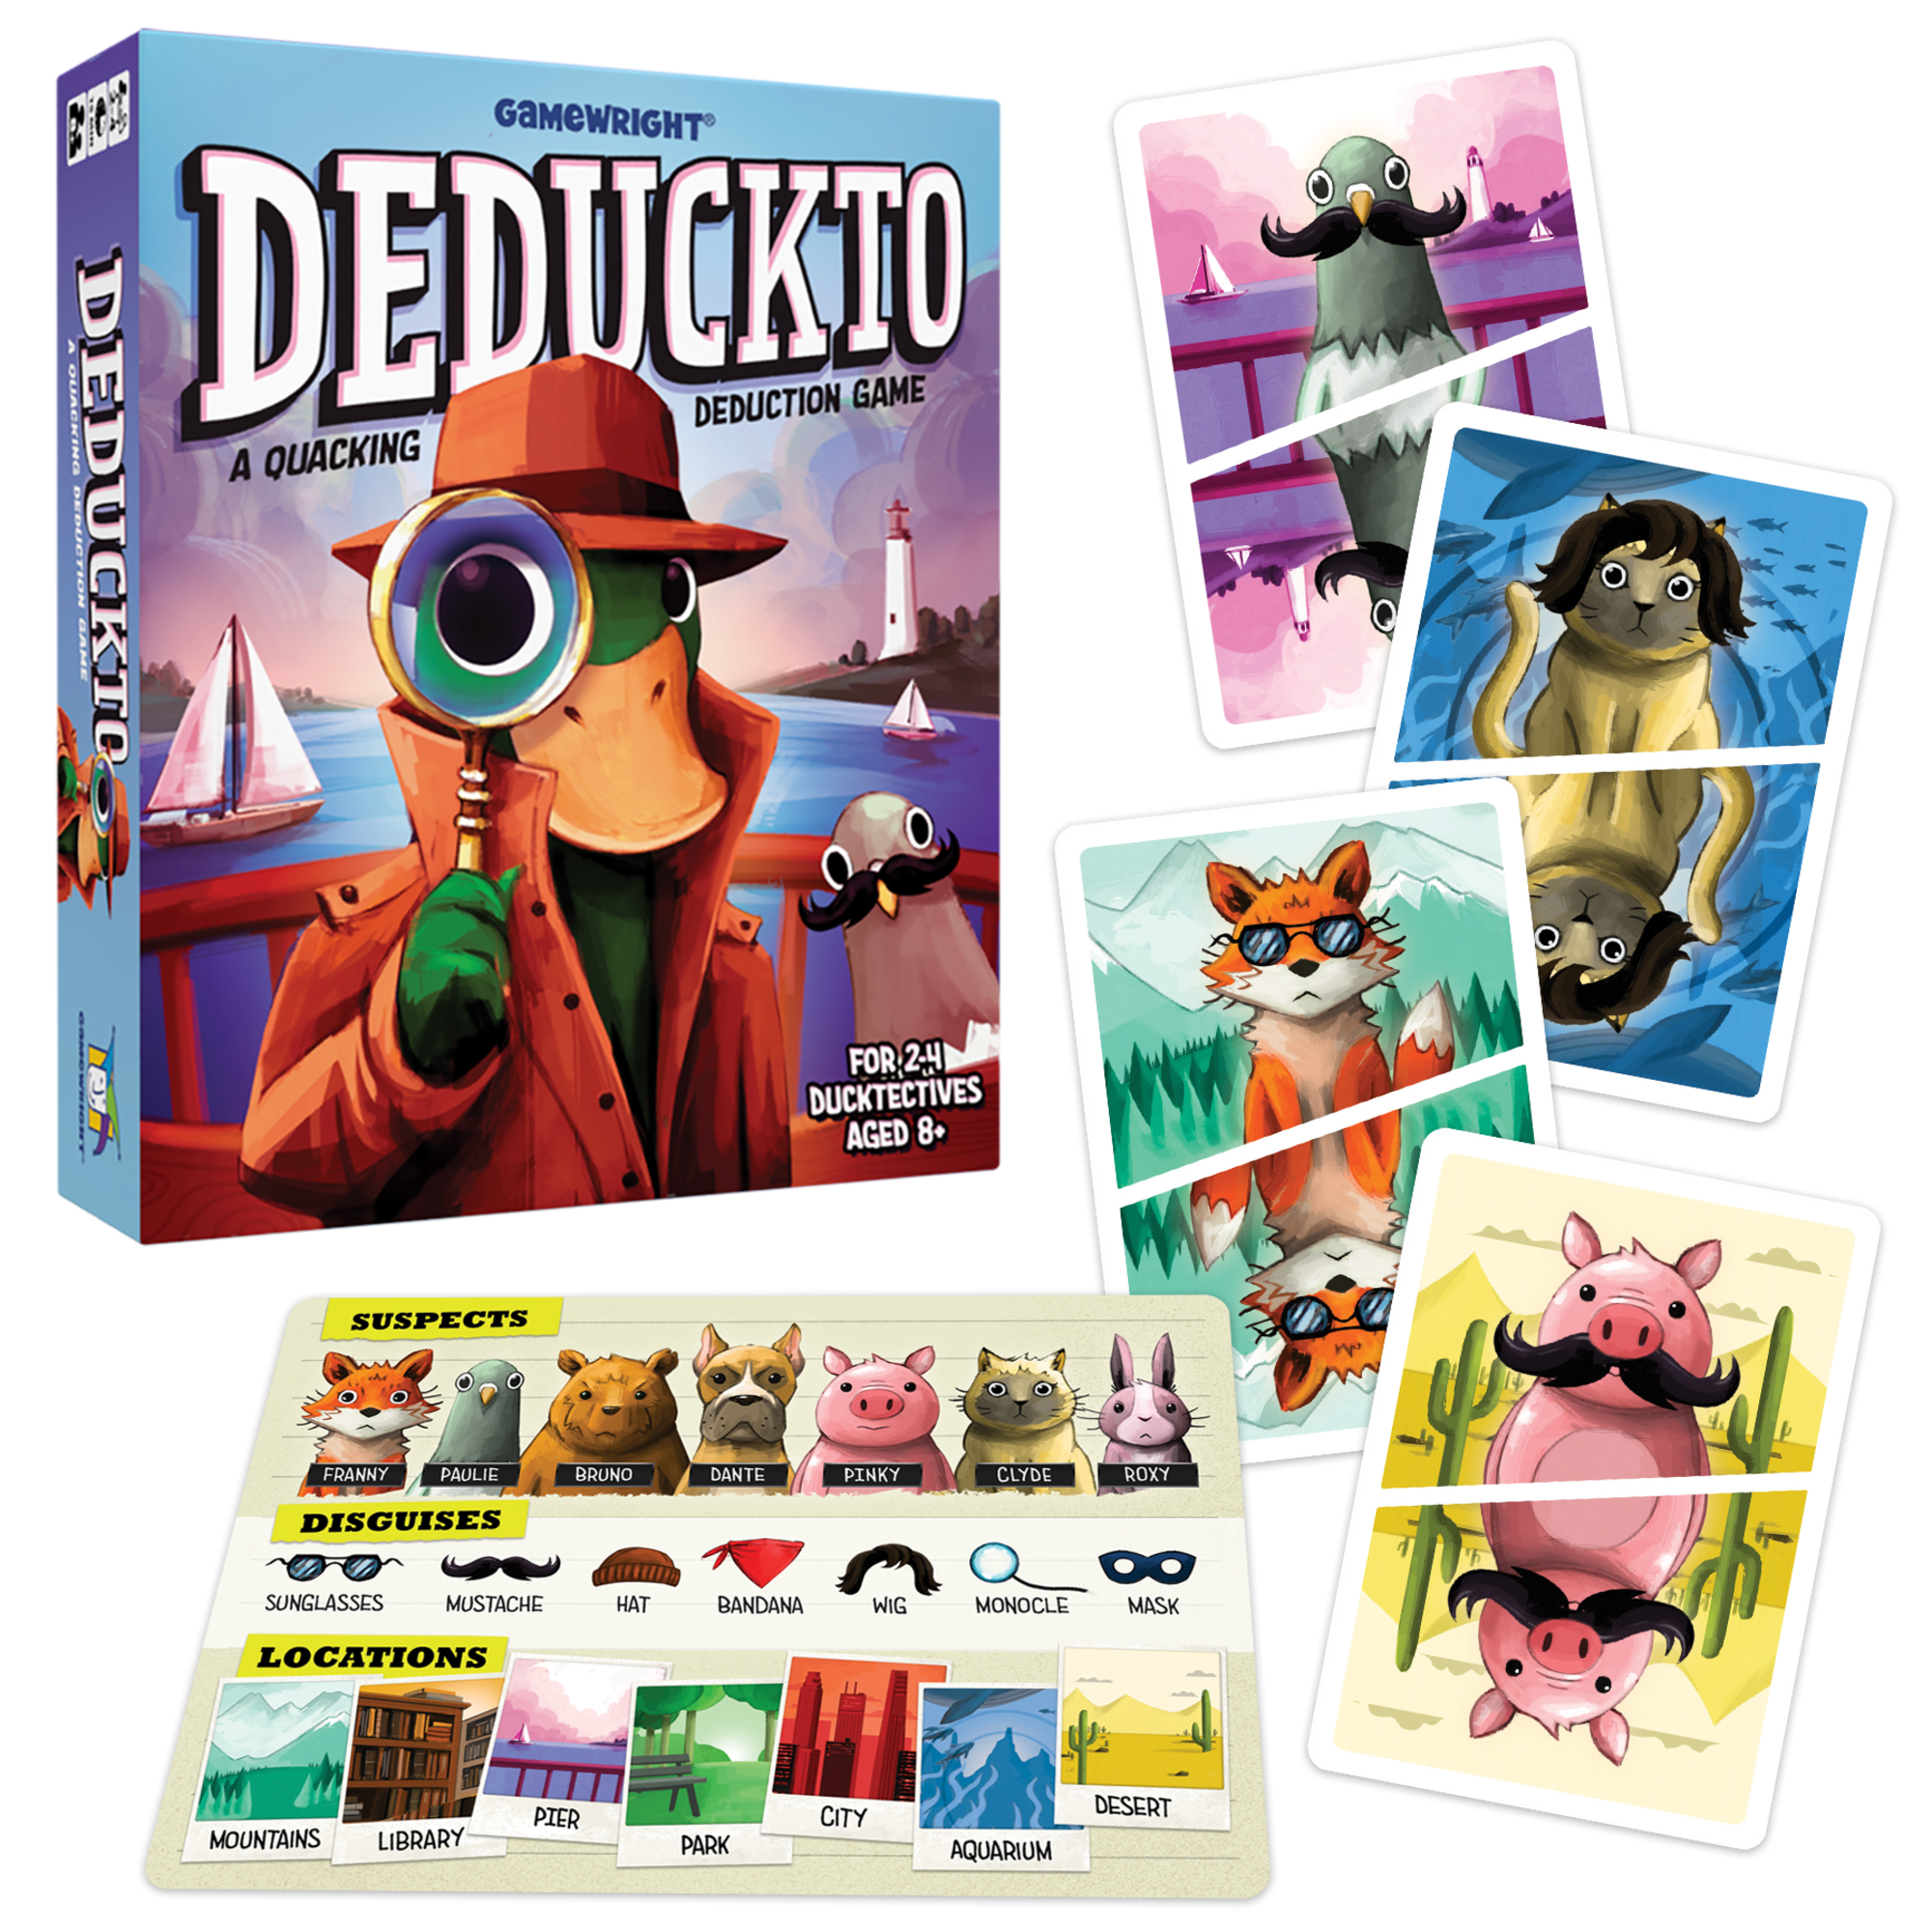 Deduckto: A Quacking Deduction Game